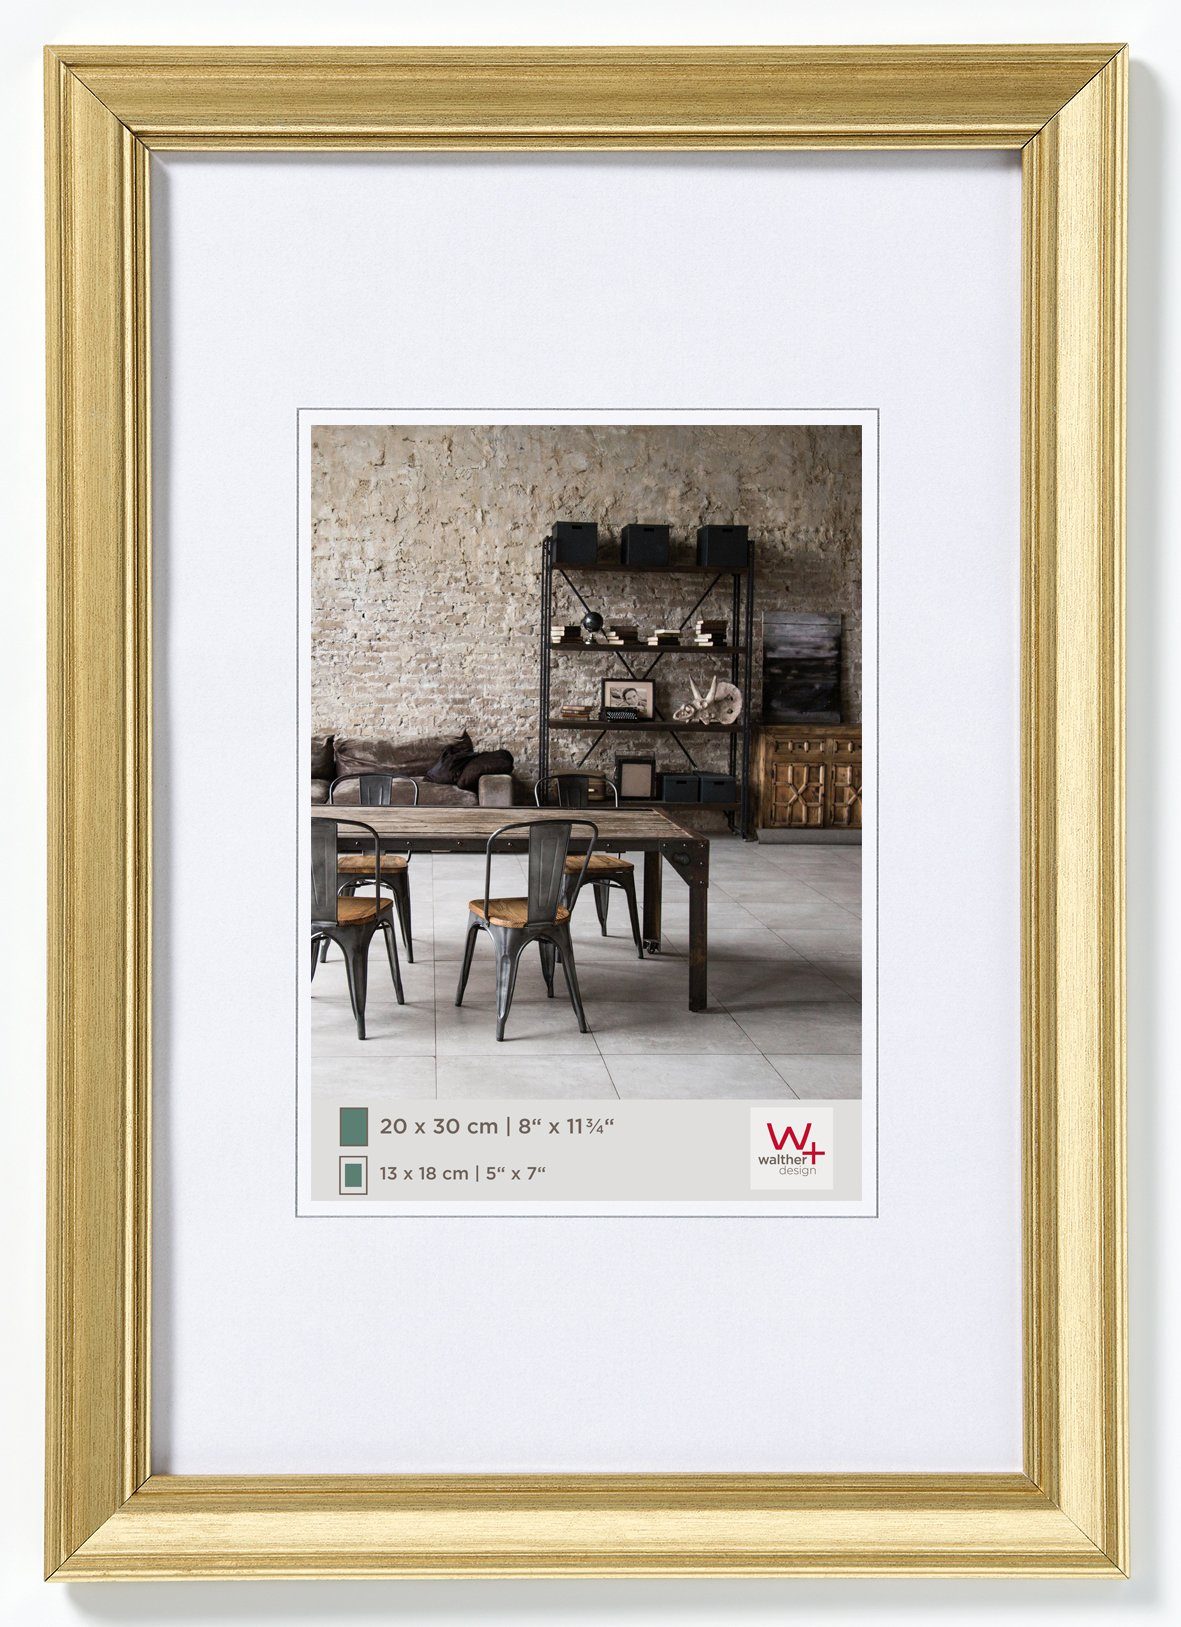 Walther Design-Bilderrahmen silber Design Lounge Bilderrahmen